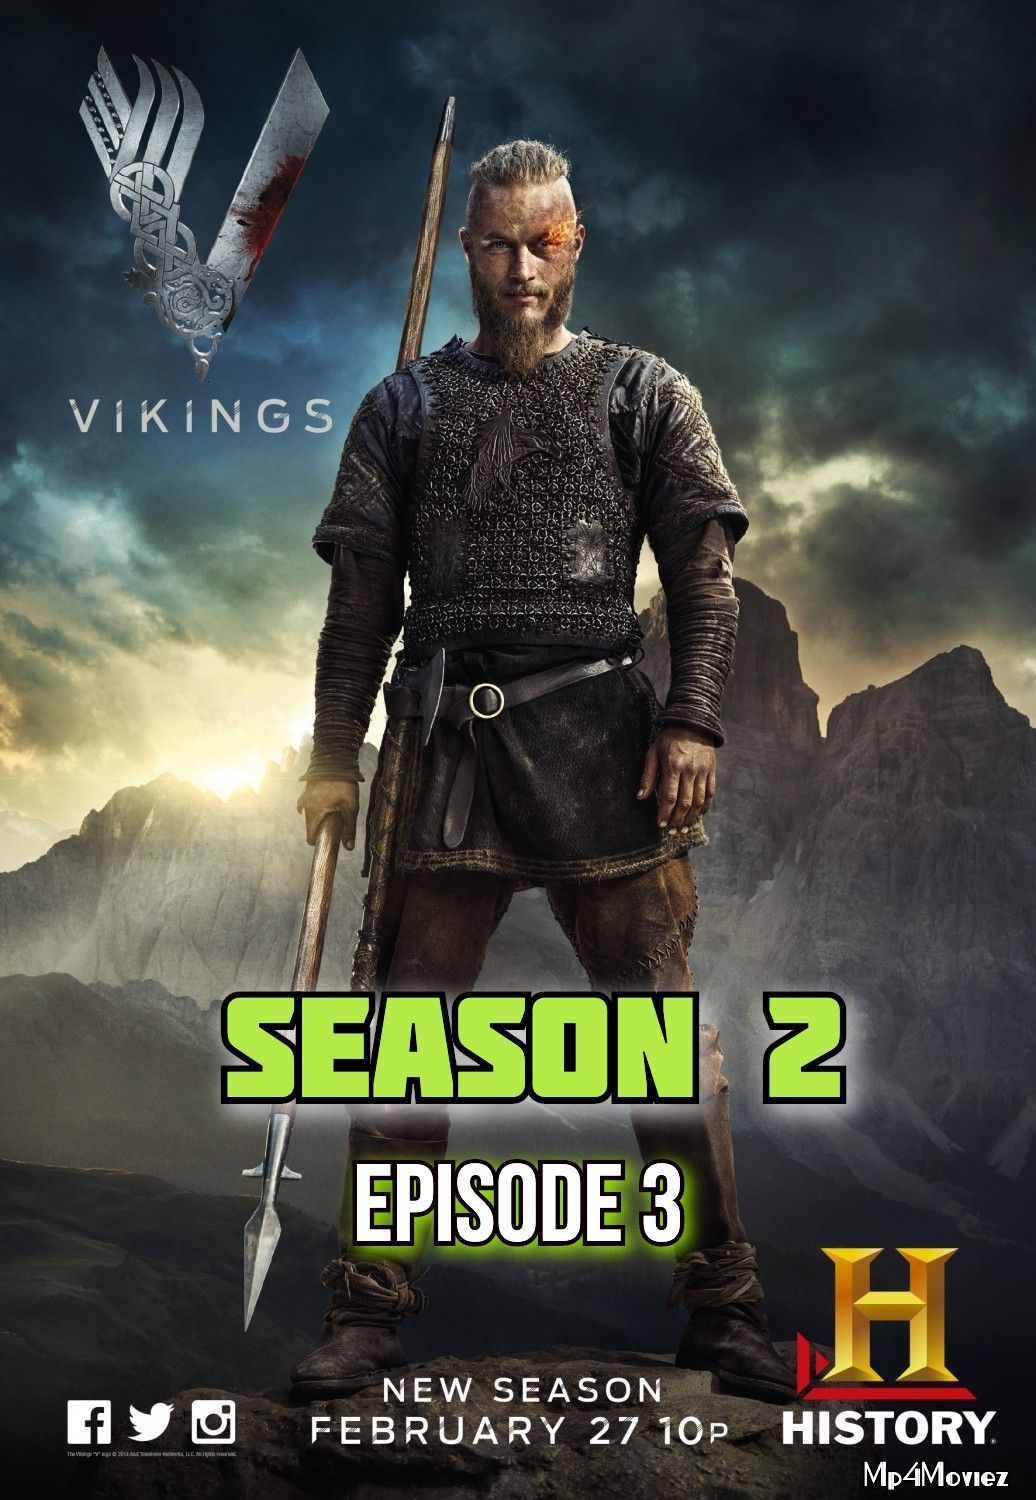 Vikings S02E03 (Treachery) Hindi Dubbed download full movie